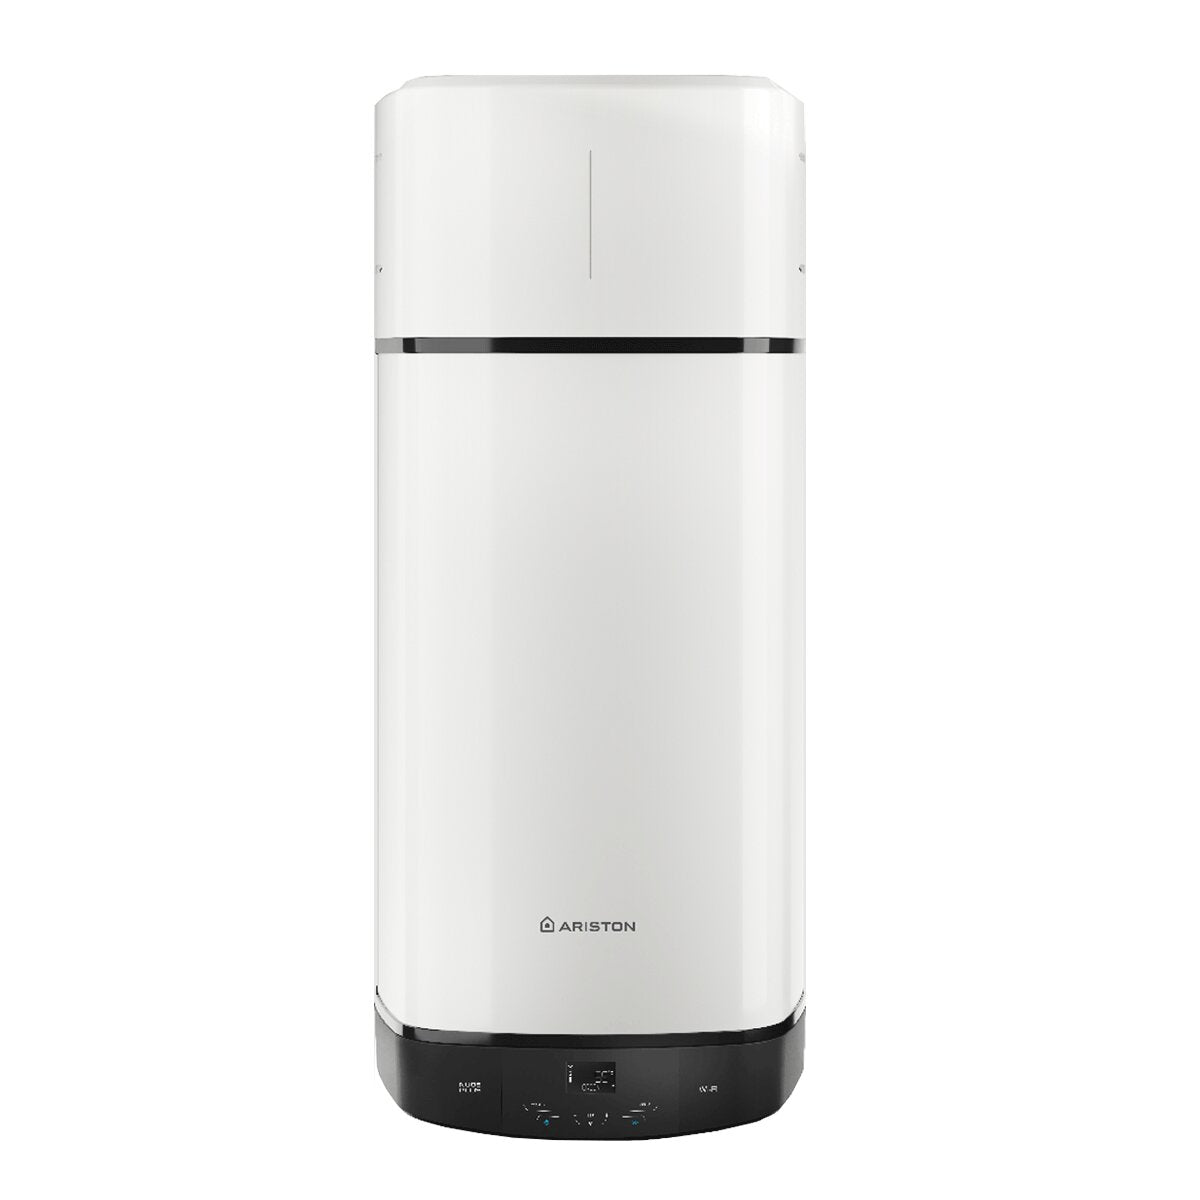 Ariston Nuos Plus R290 S2 WiFi A+ 150 Liter Wärmepumpen-Warmwasserbereiter